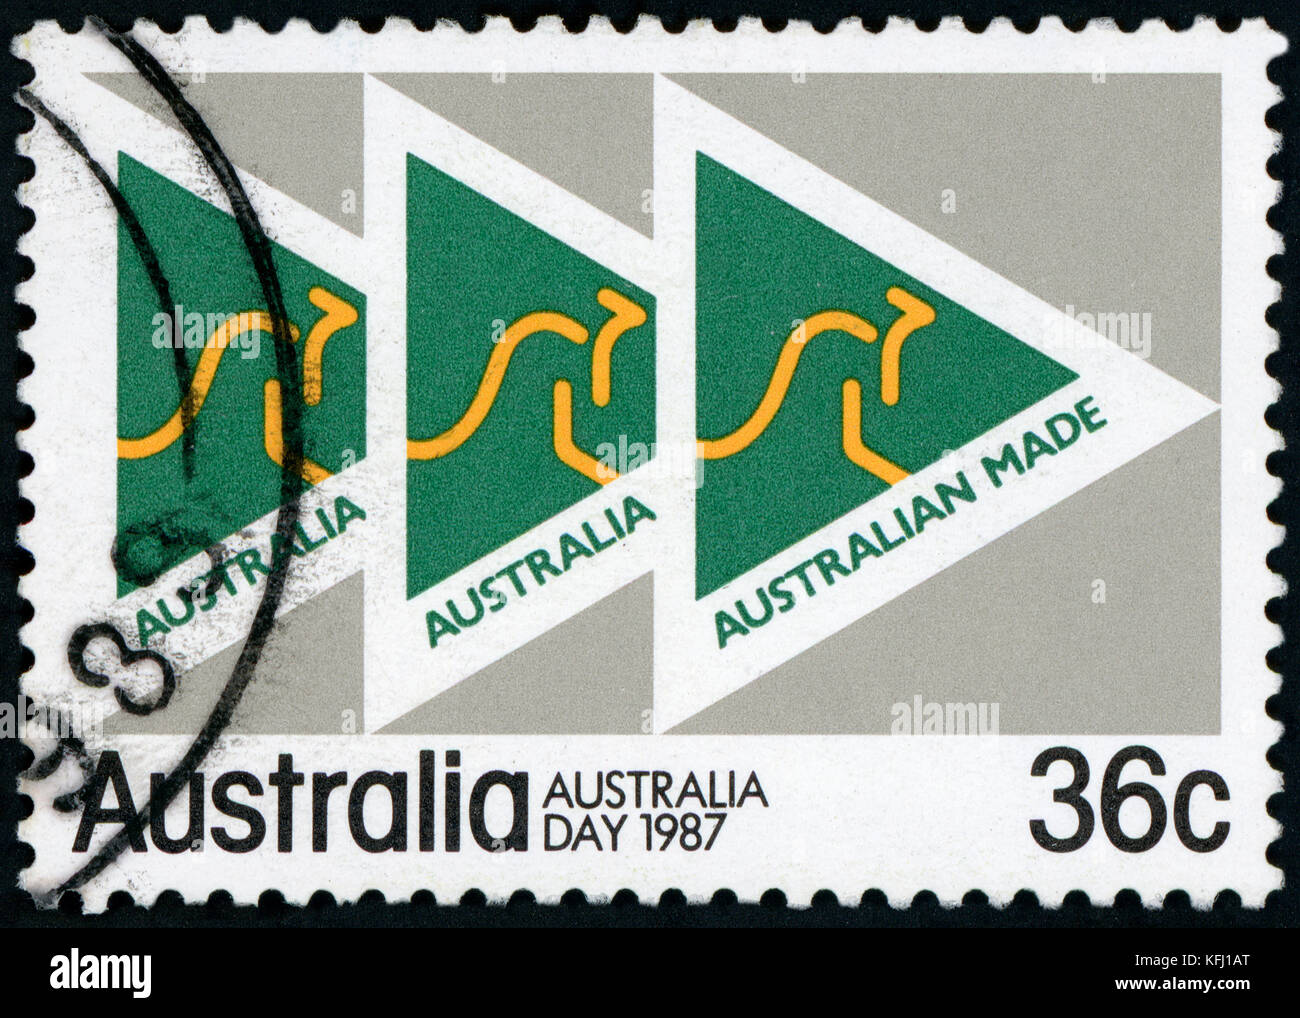 Australia Postage stamp - Made in Australia Stock Photo